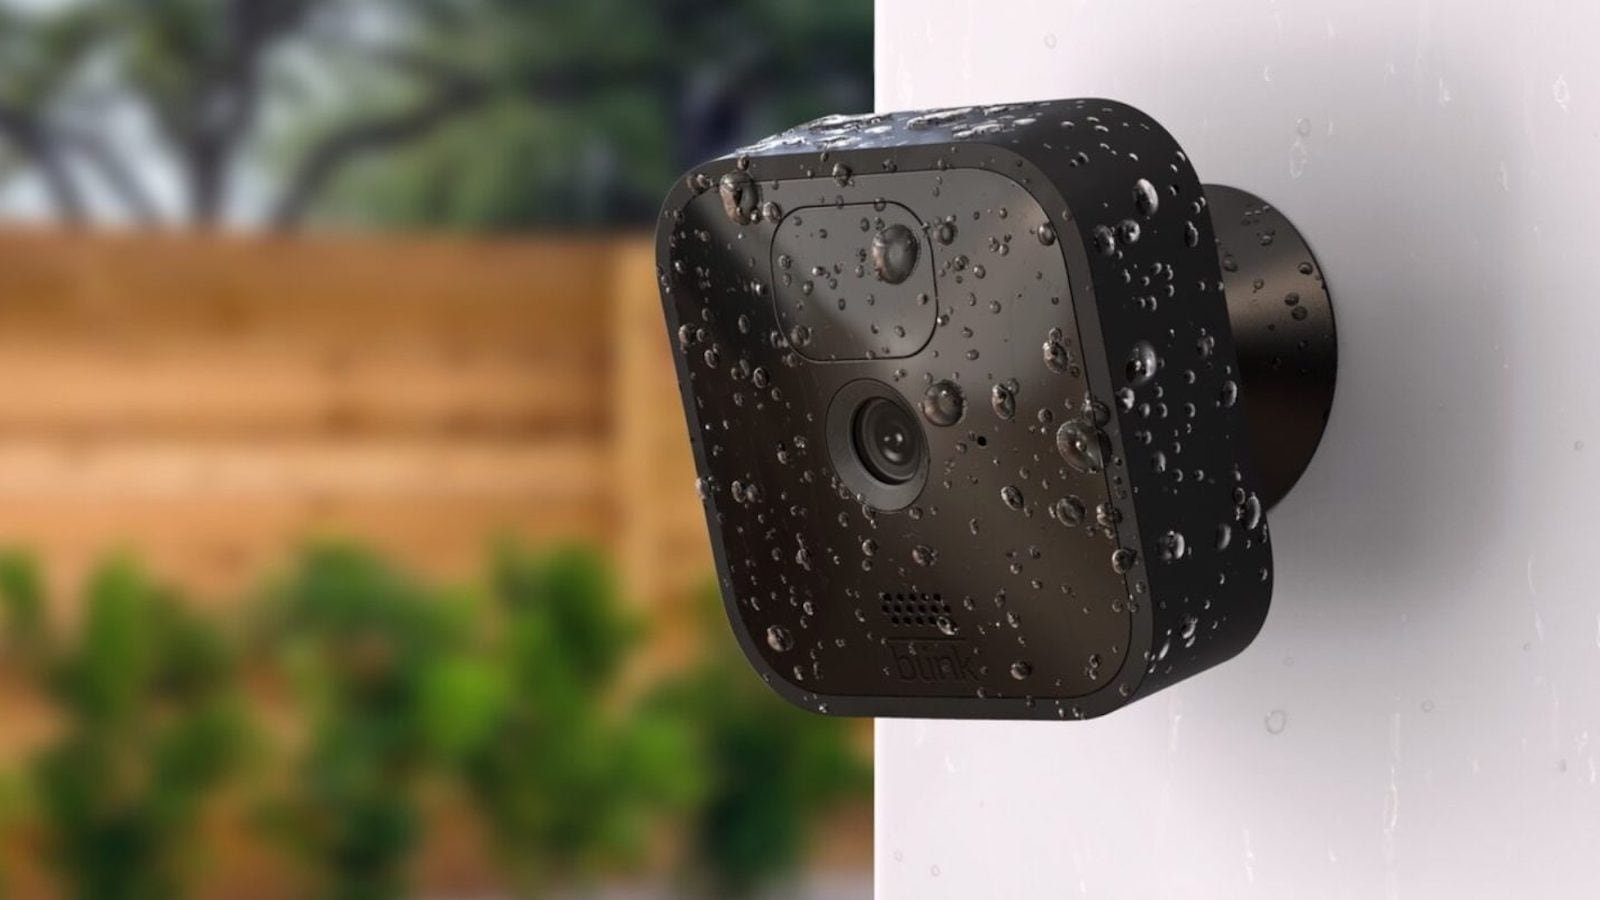 Blink Outdoor security camera is Alexa compatible